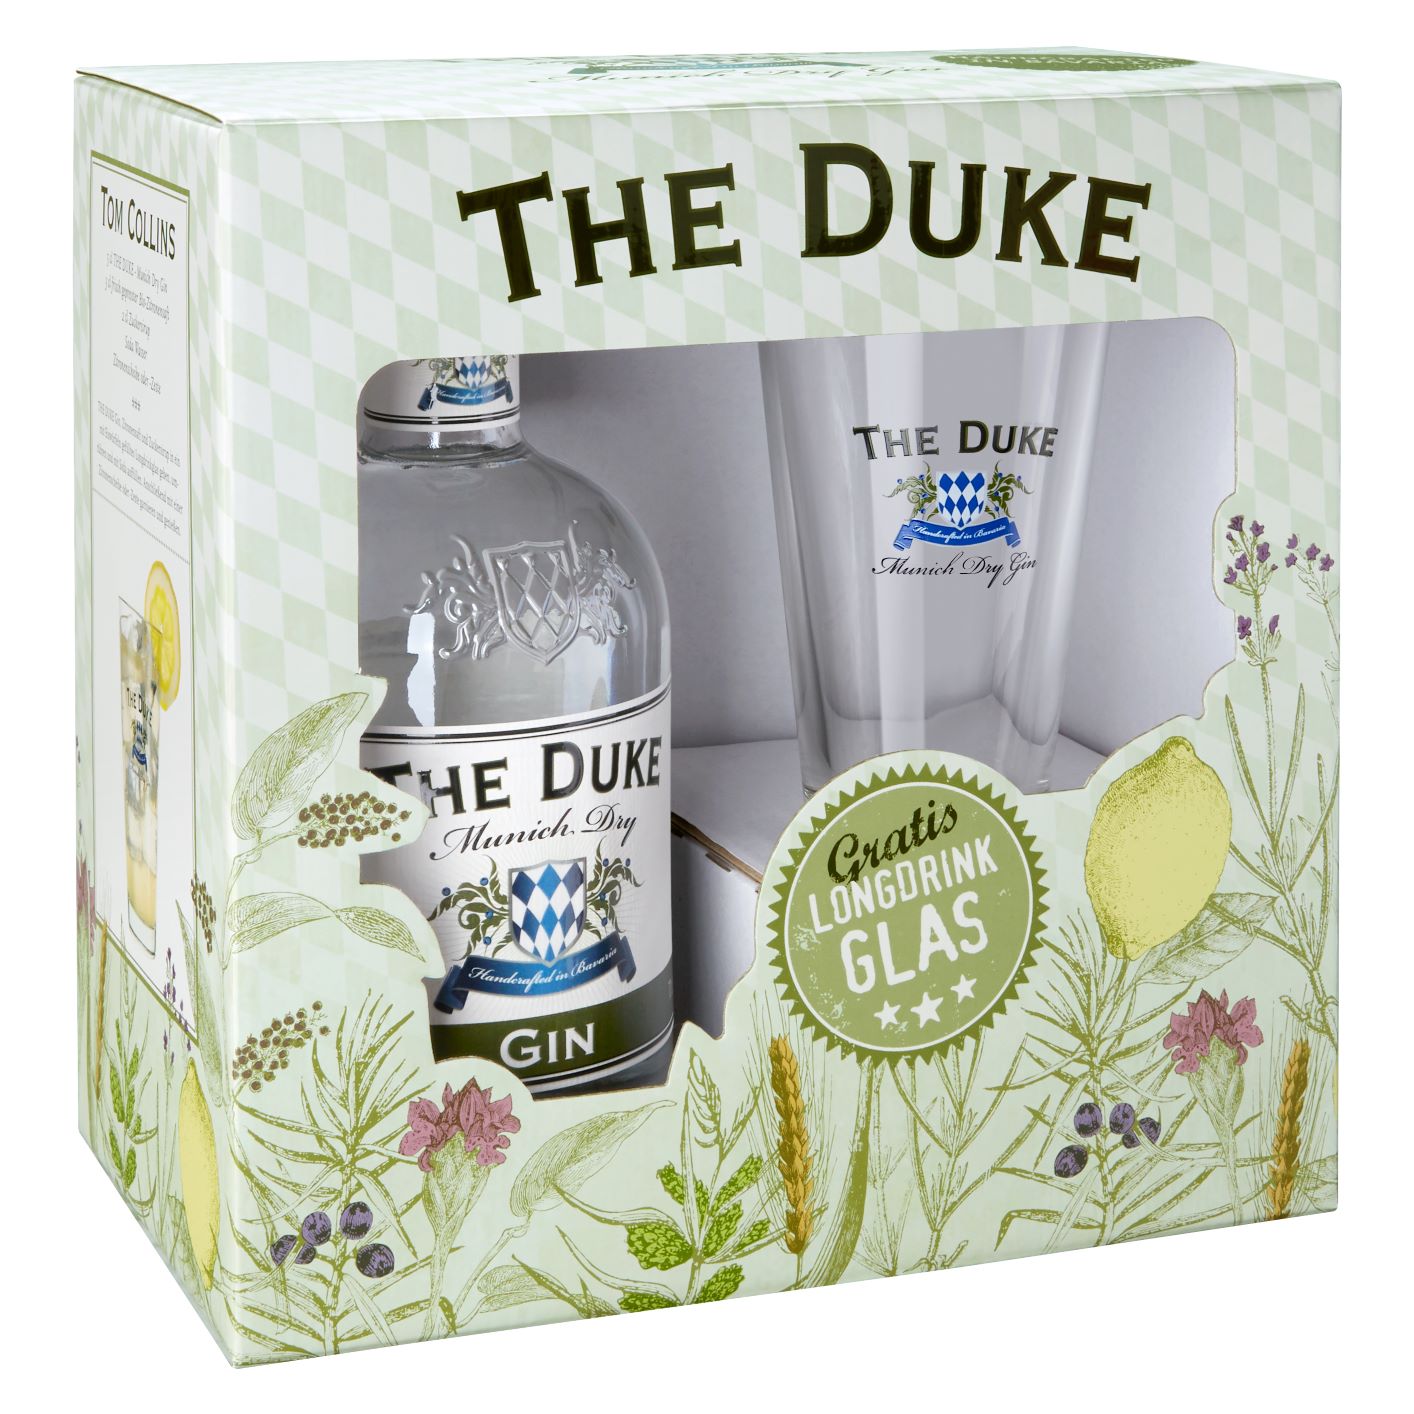 The Duke Munich Dry Gin 45% Vol. 0,7l in Giftbox with Longdrinkglas